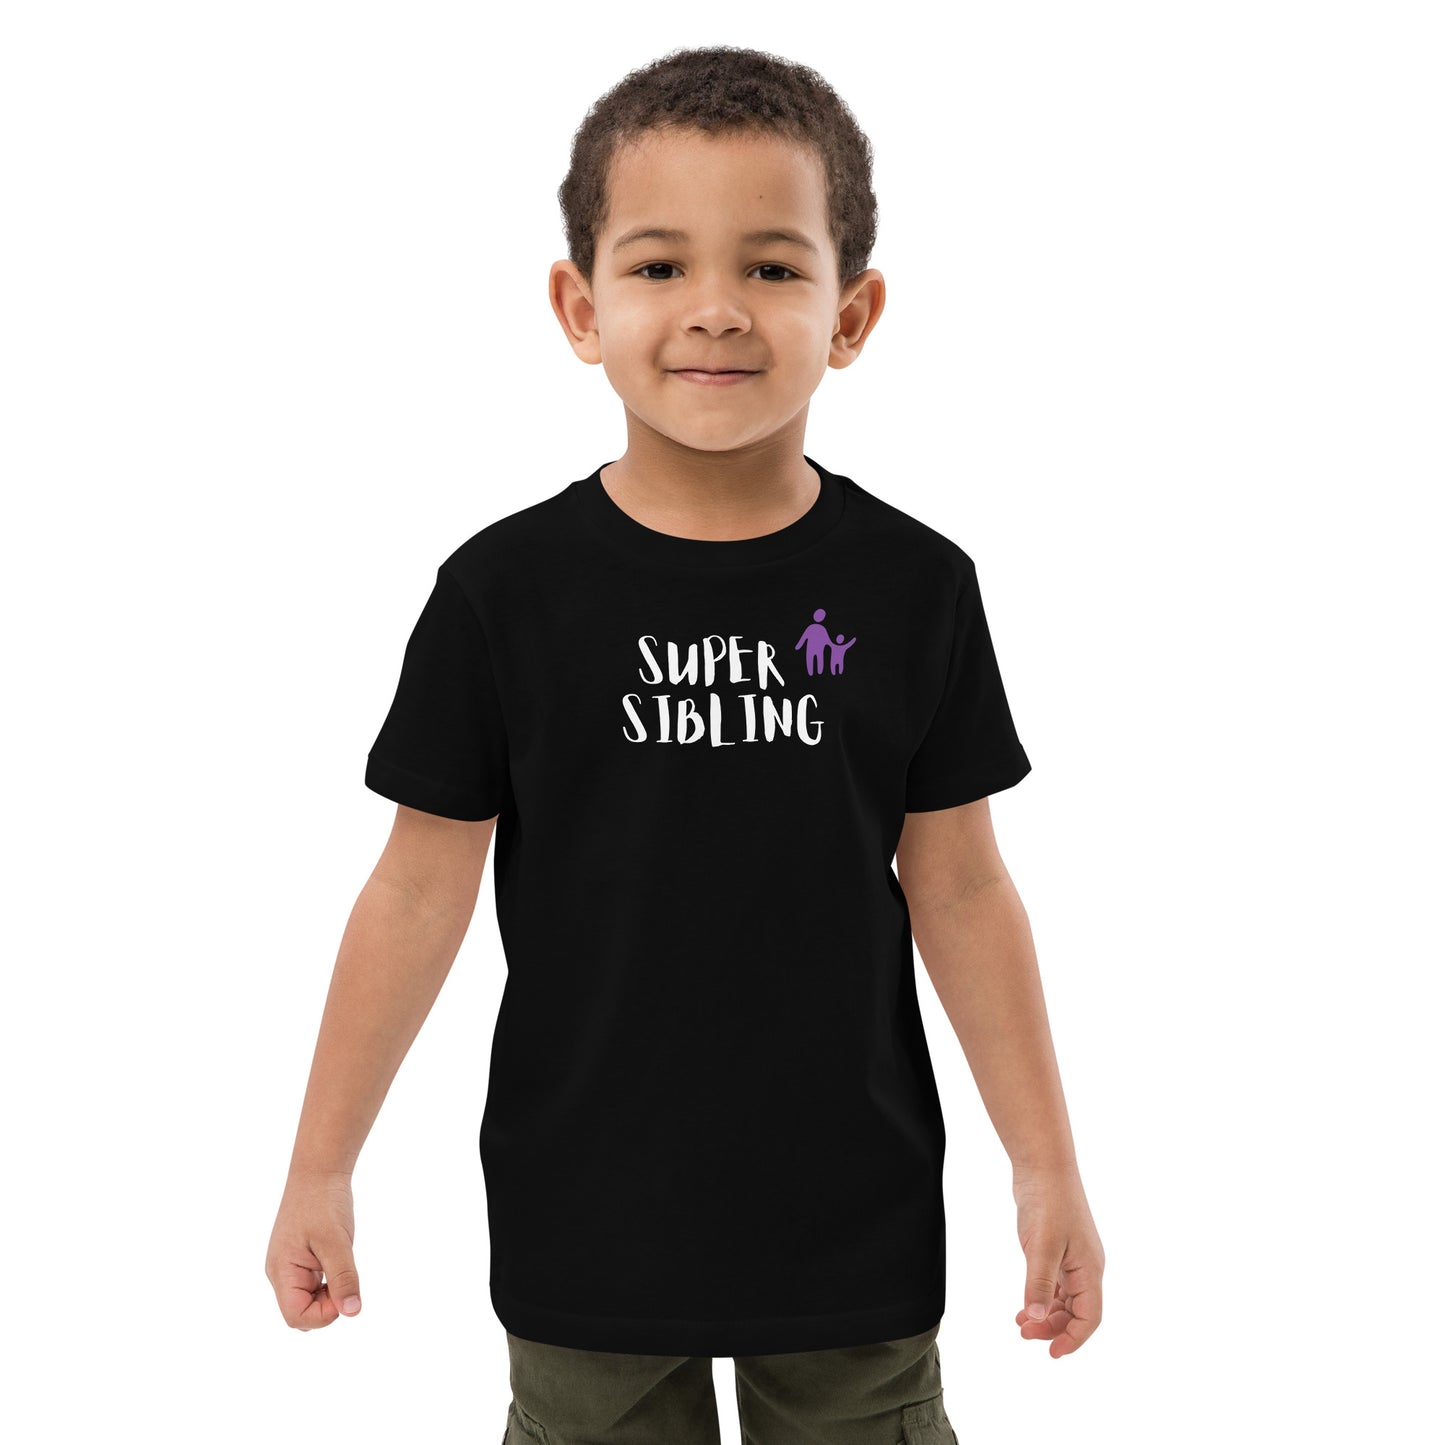 Super Sibling Organic cotton kids t-shirt